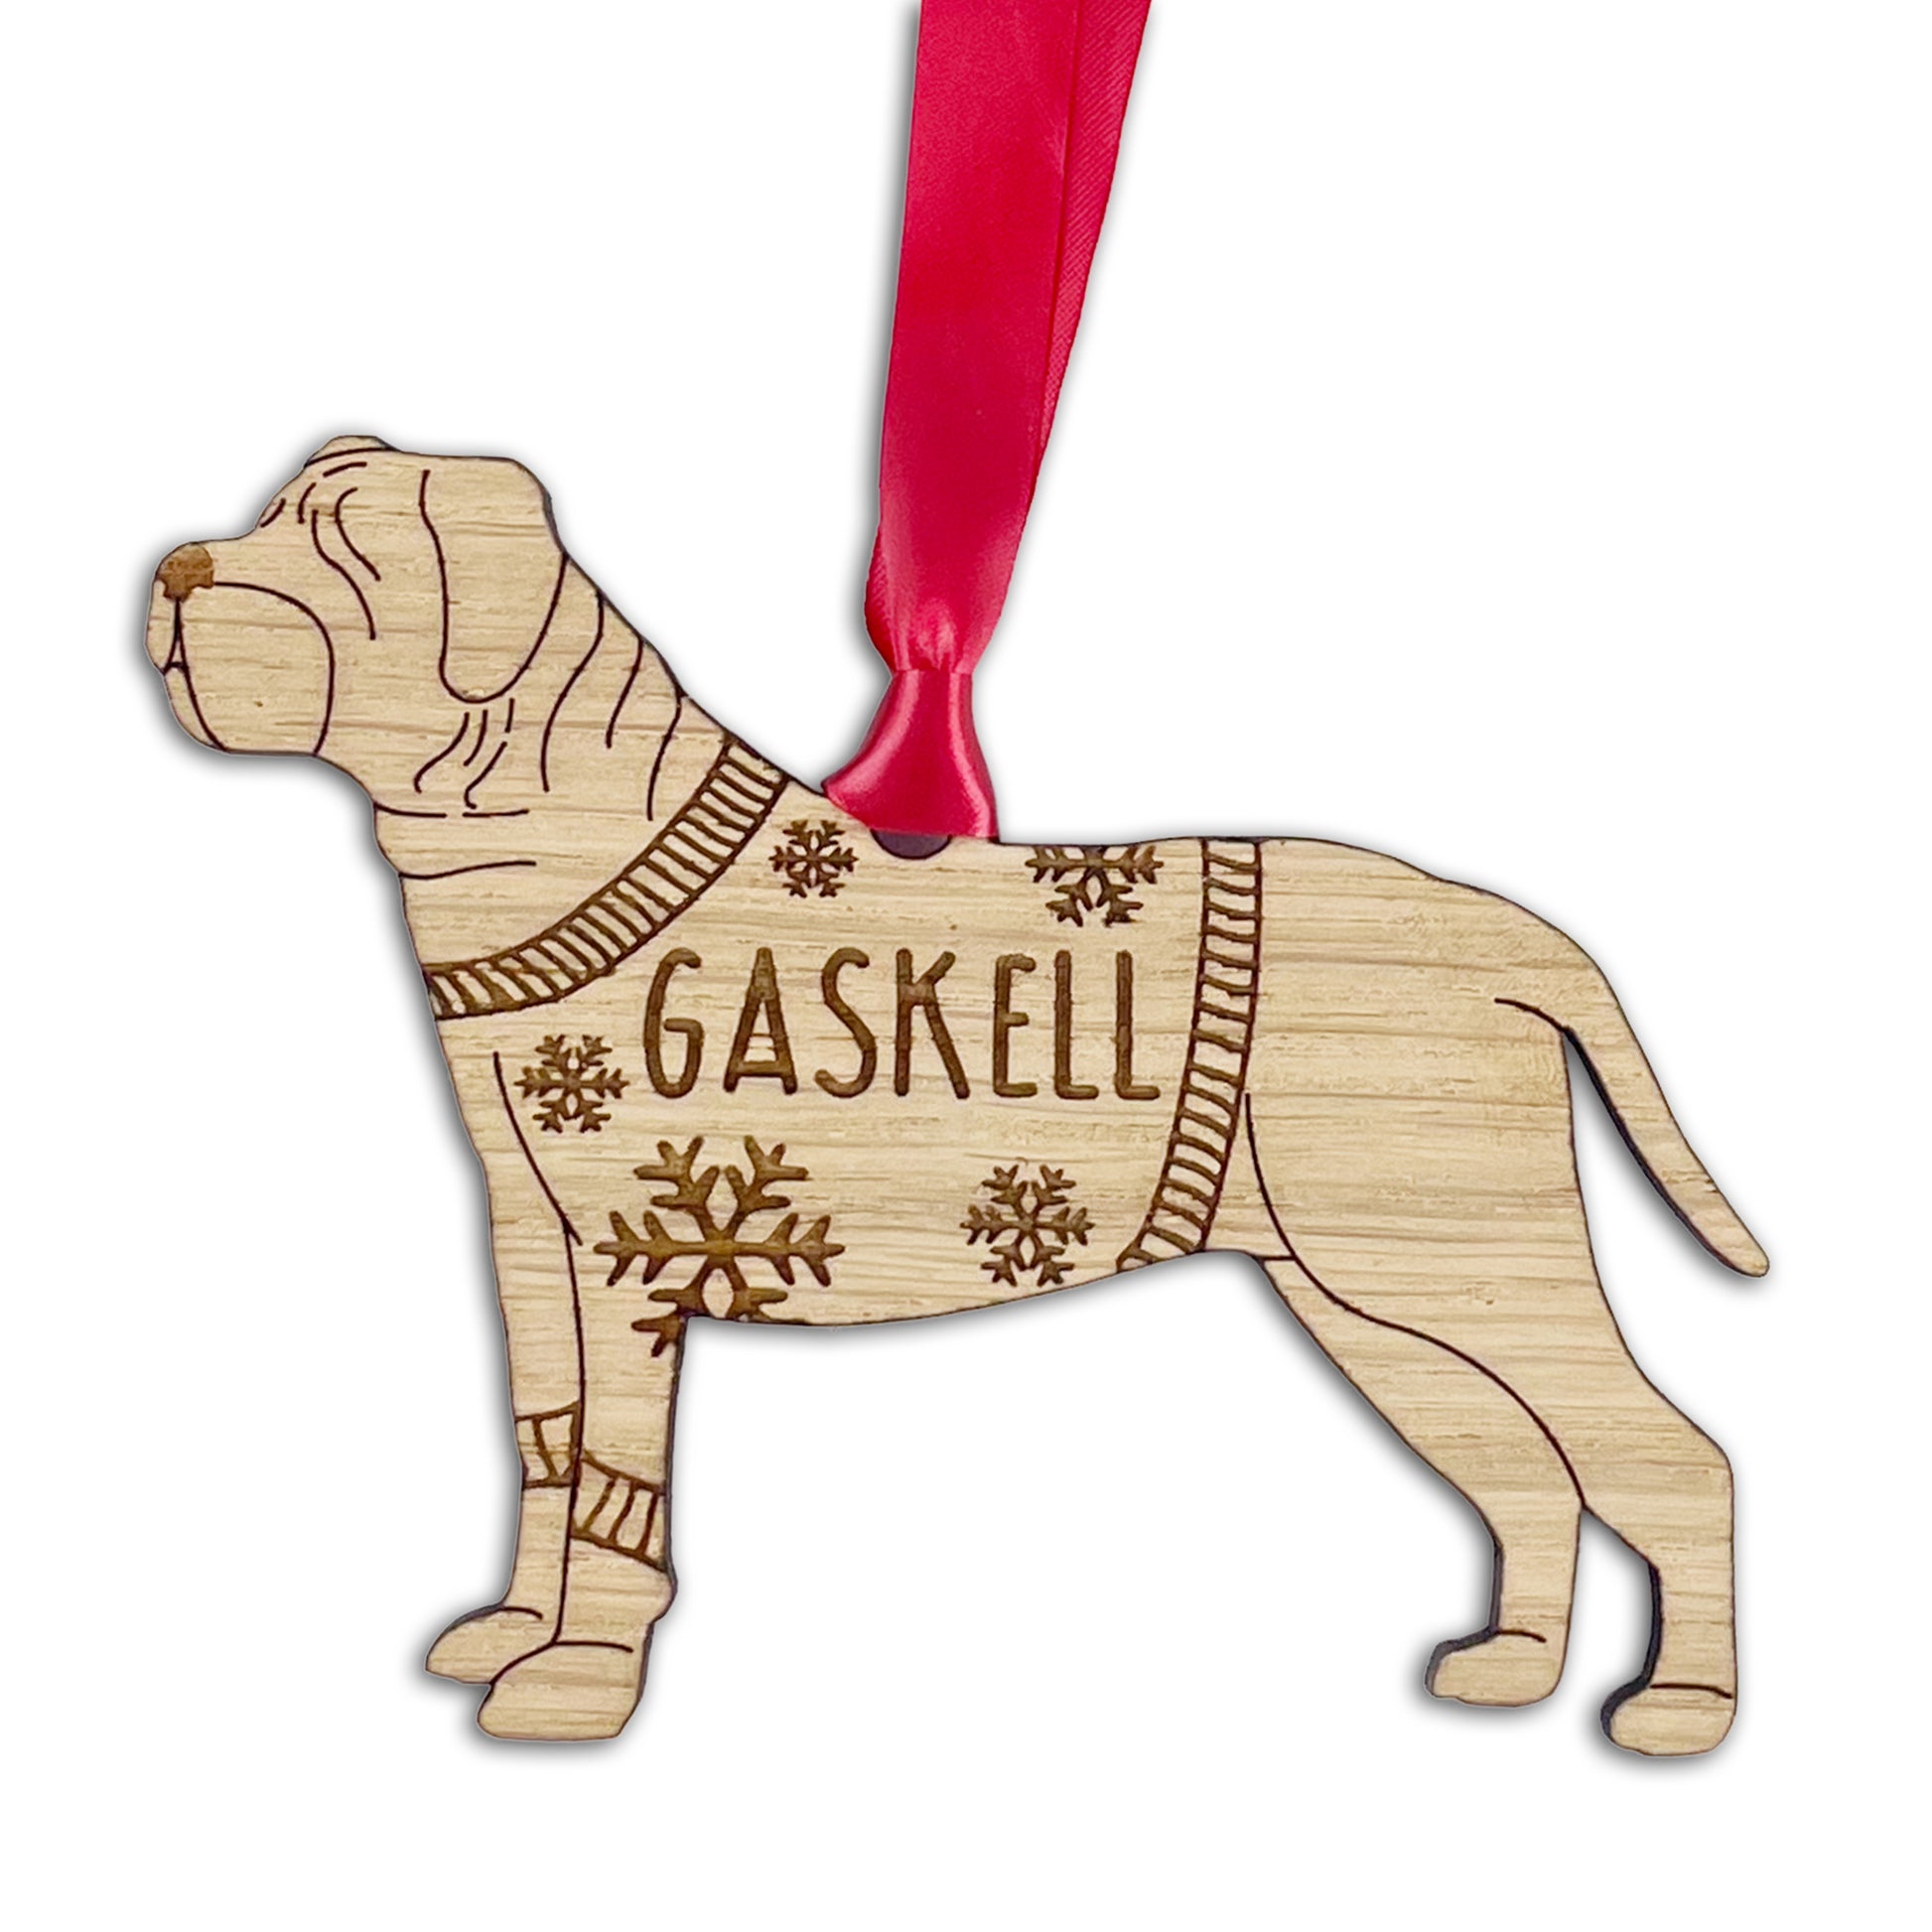 Wooden Dog Bauble Personalised French Mastiff Bauble Jumper Dog Bauble - Oak Veneer Wood - Add any name: French Mastiff